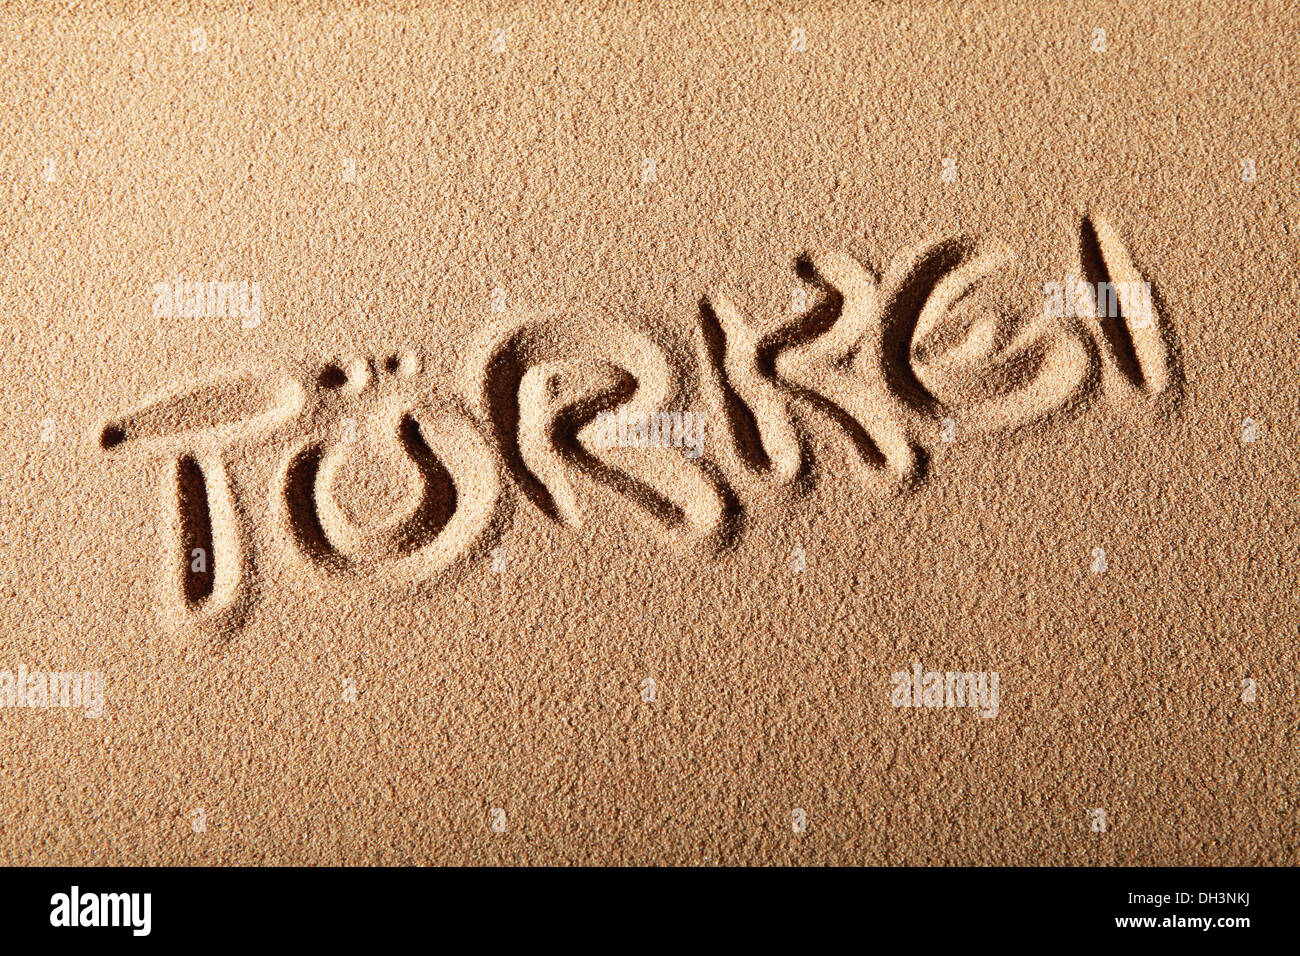 Writing in the sand 'TÜRKEI' or 'TURKEY' Stock Photo